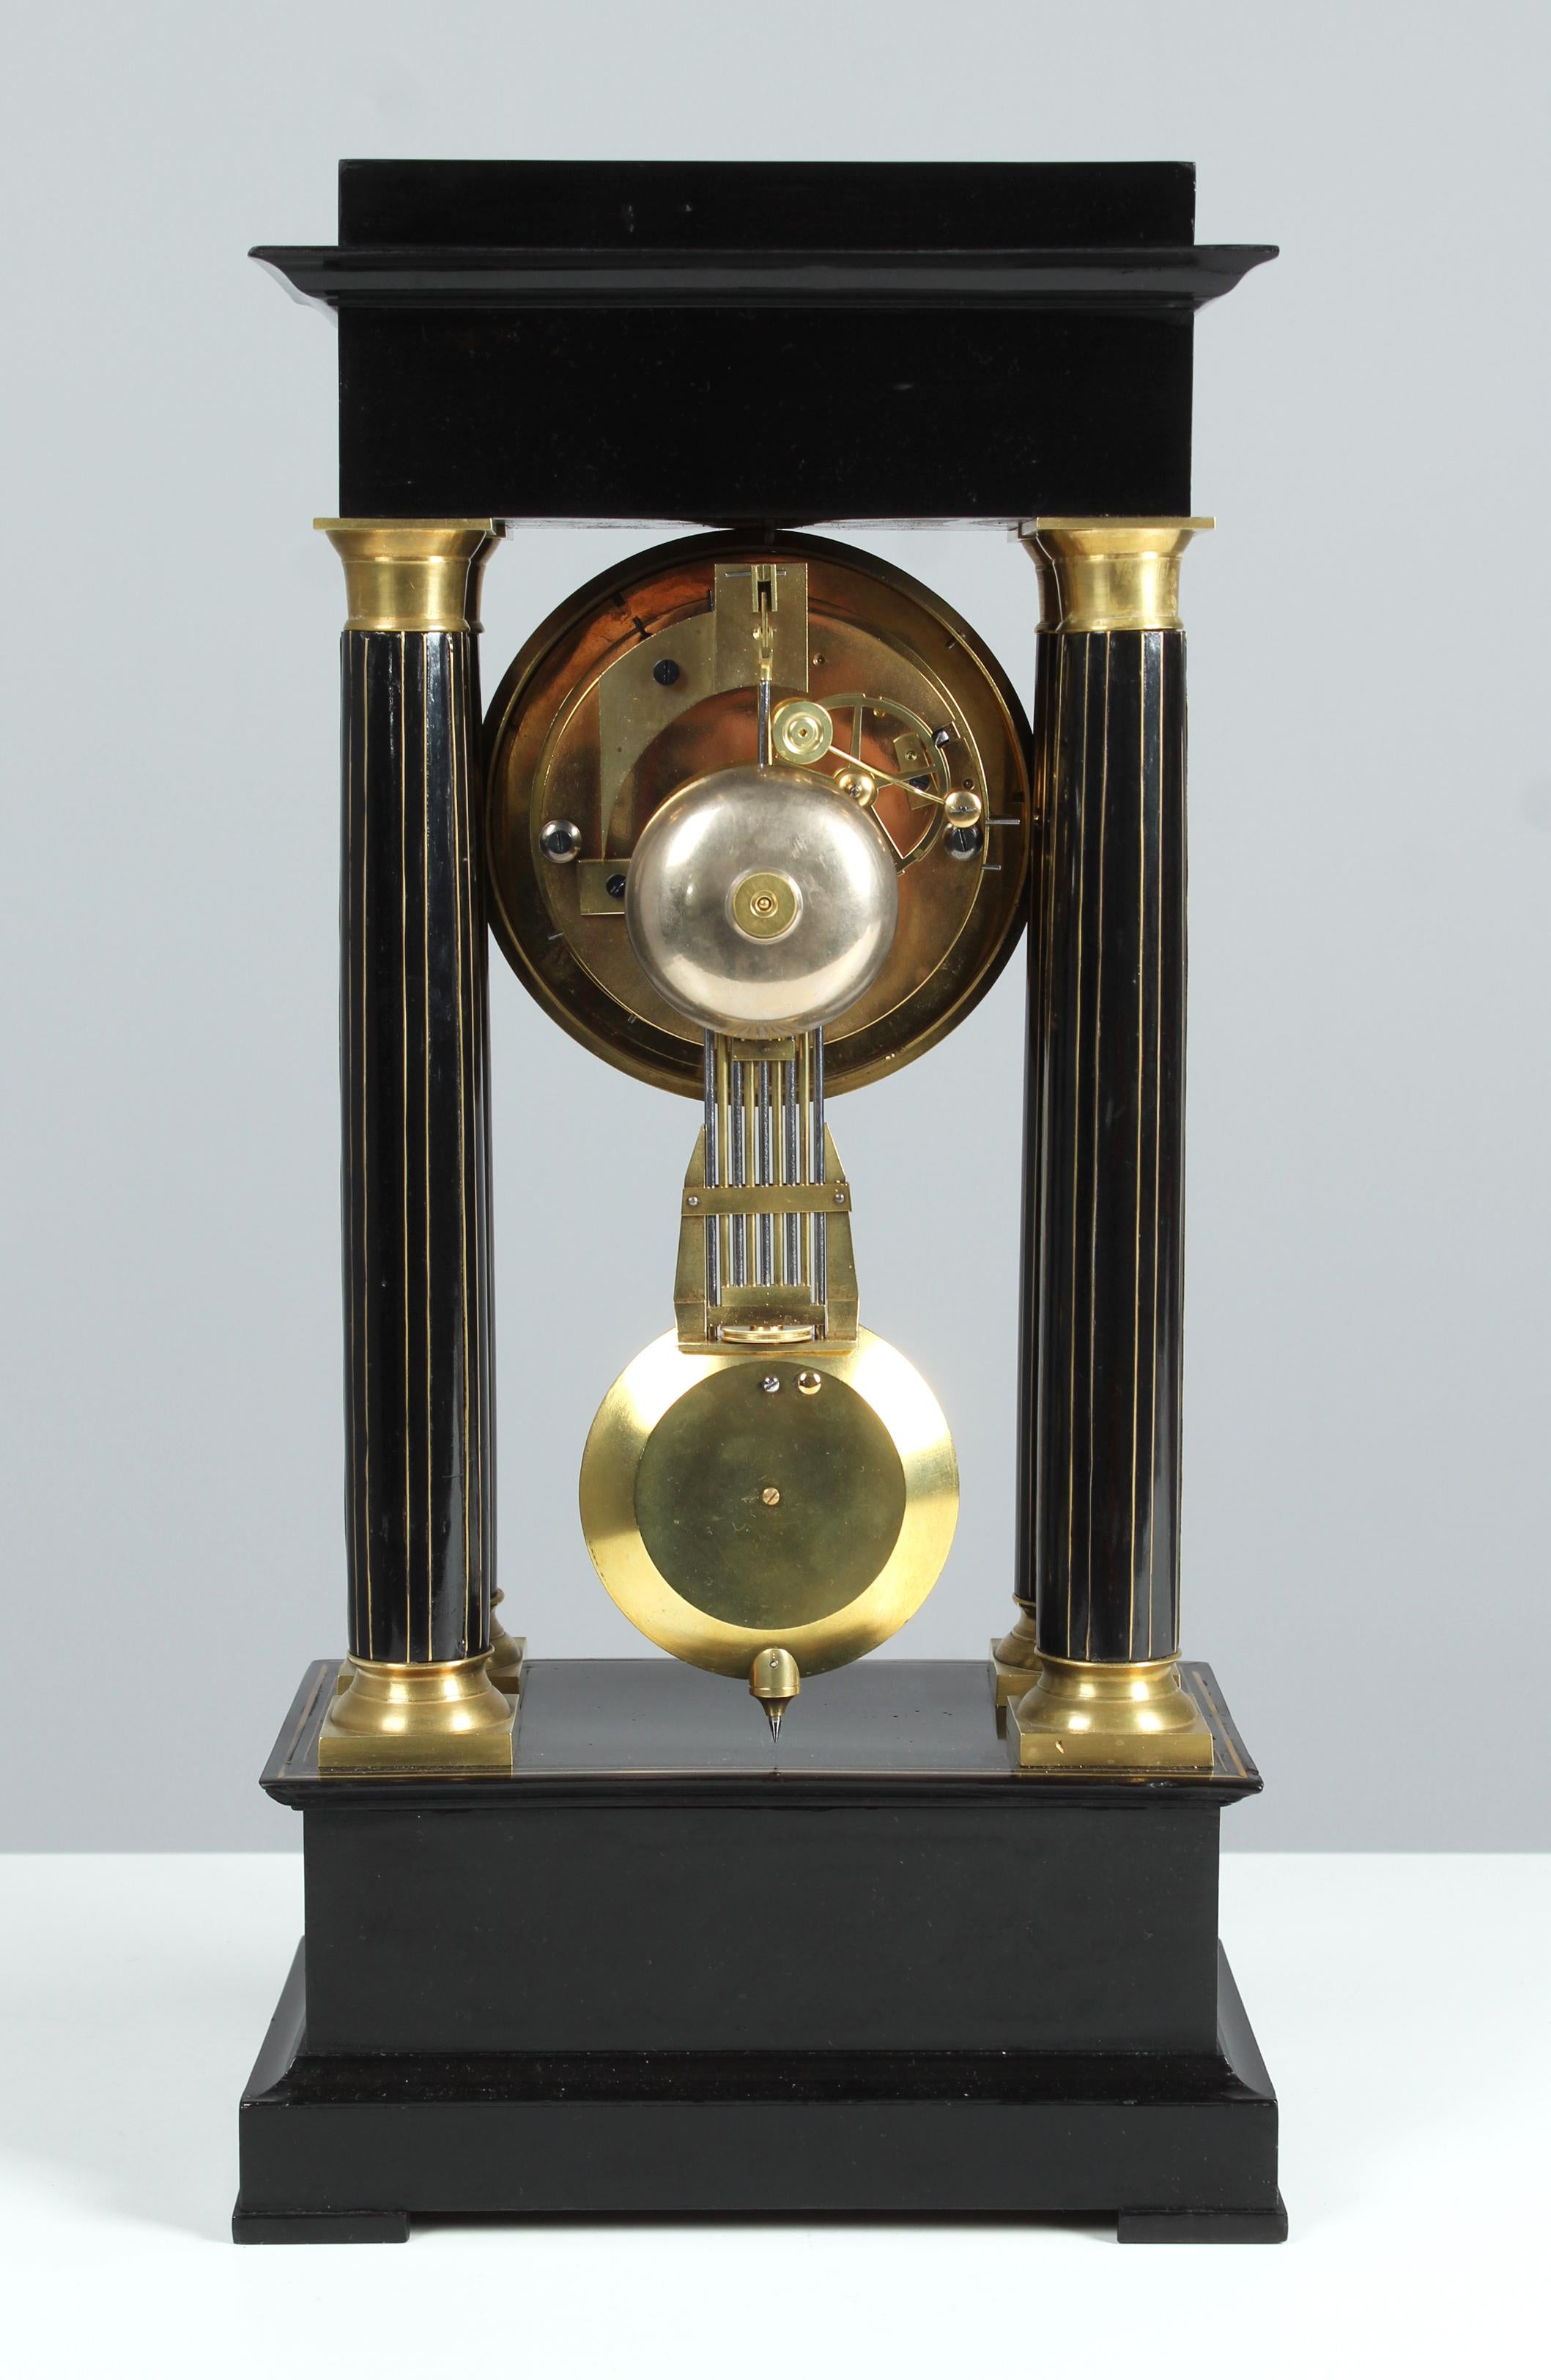 Brass 19th Century Portal Mantel Clock with Date and open Escapement, Paris, c. 1870